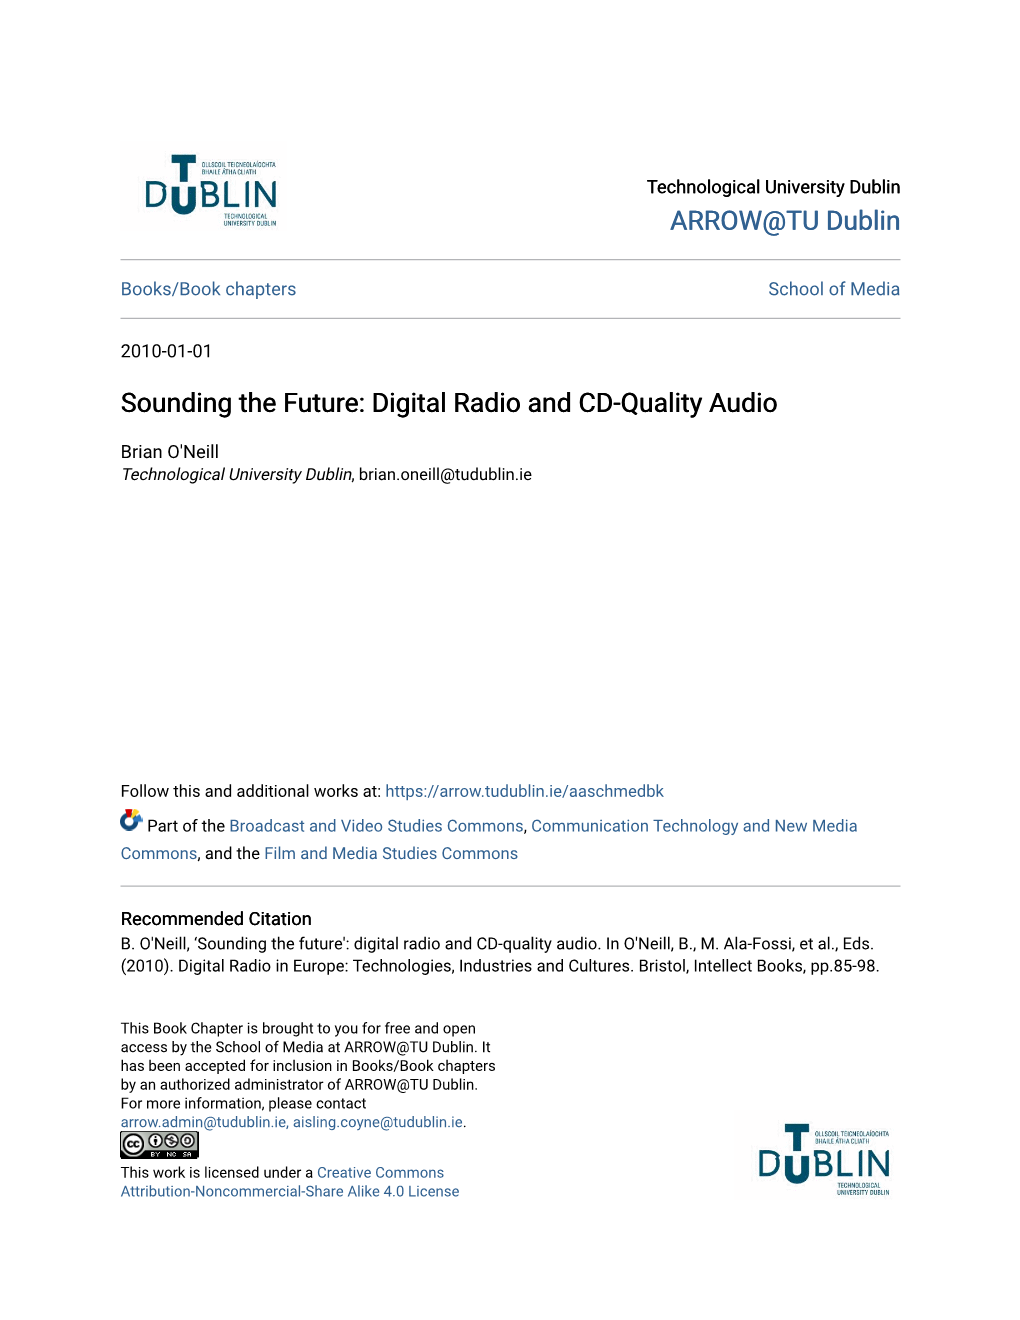 Digital Radio and CD-Quality Audio